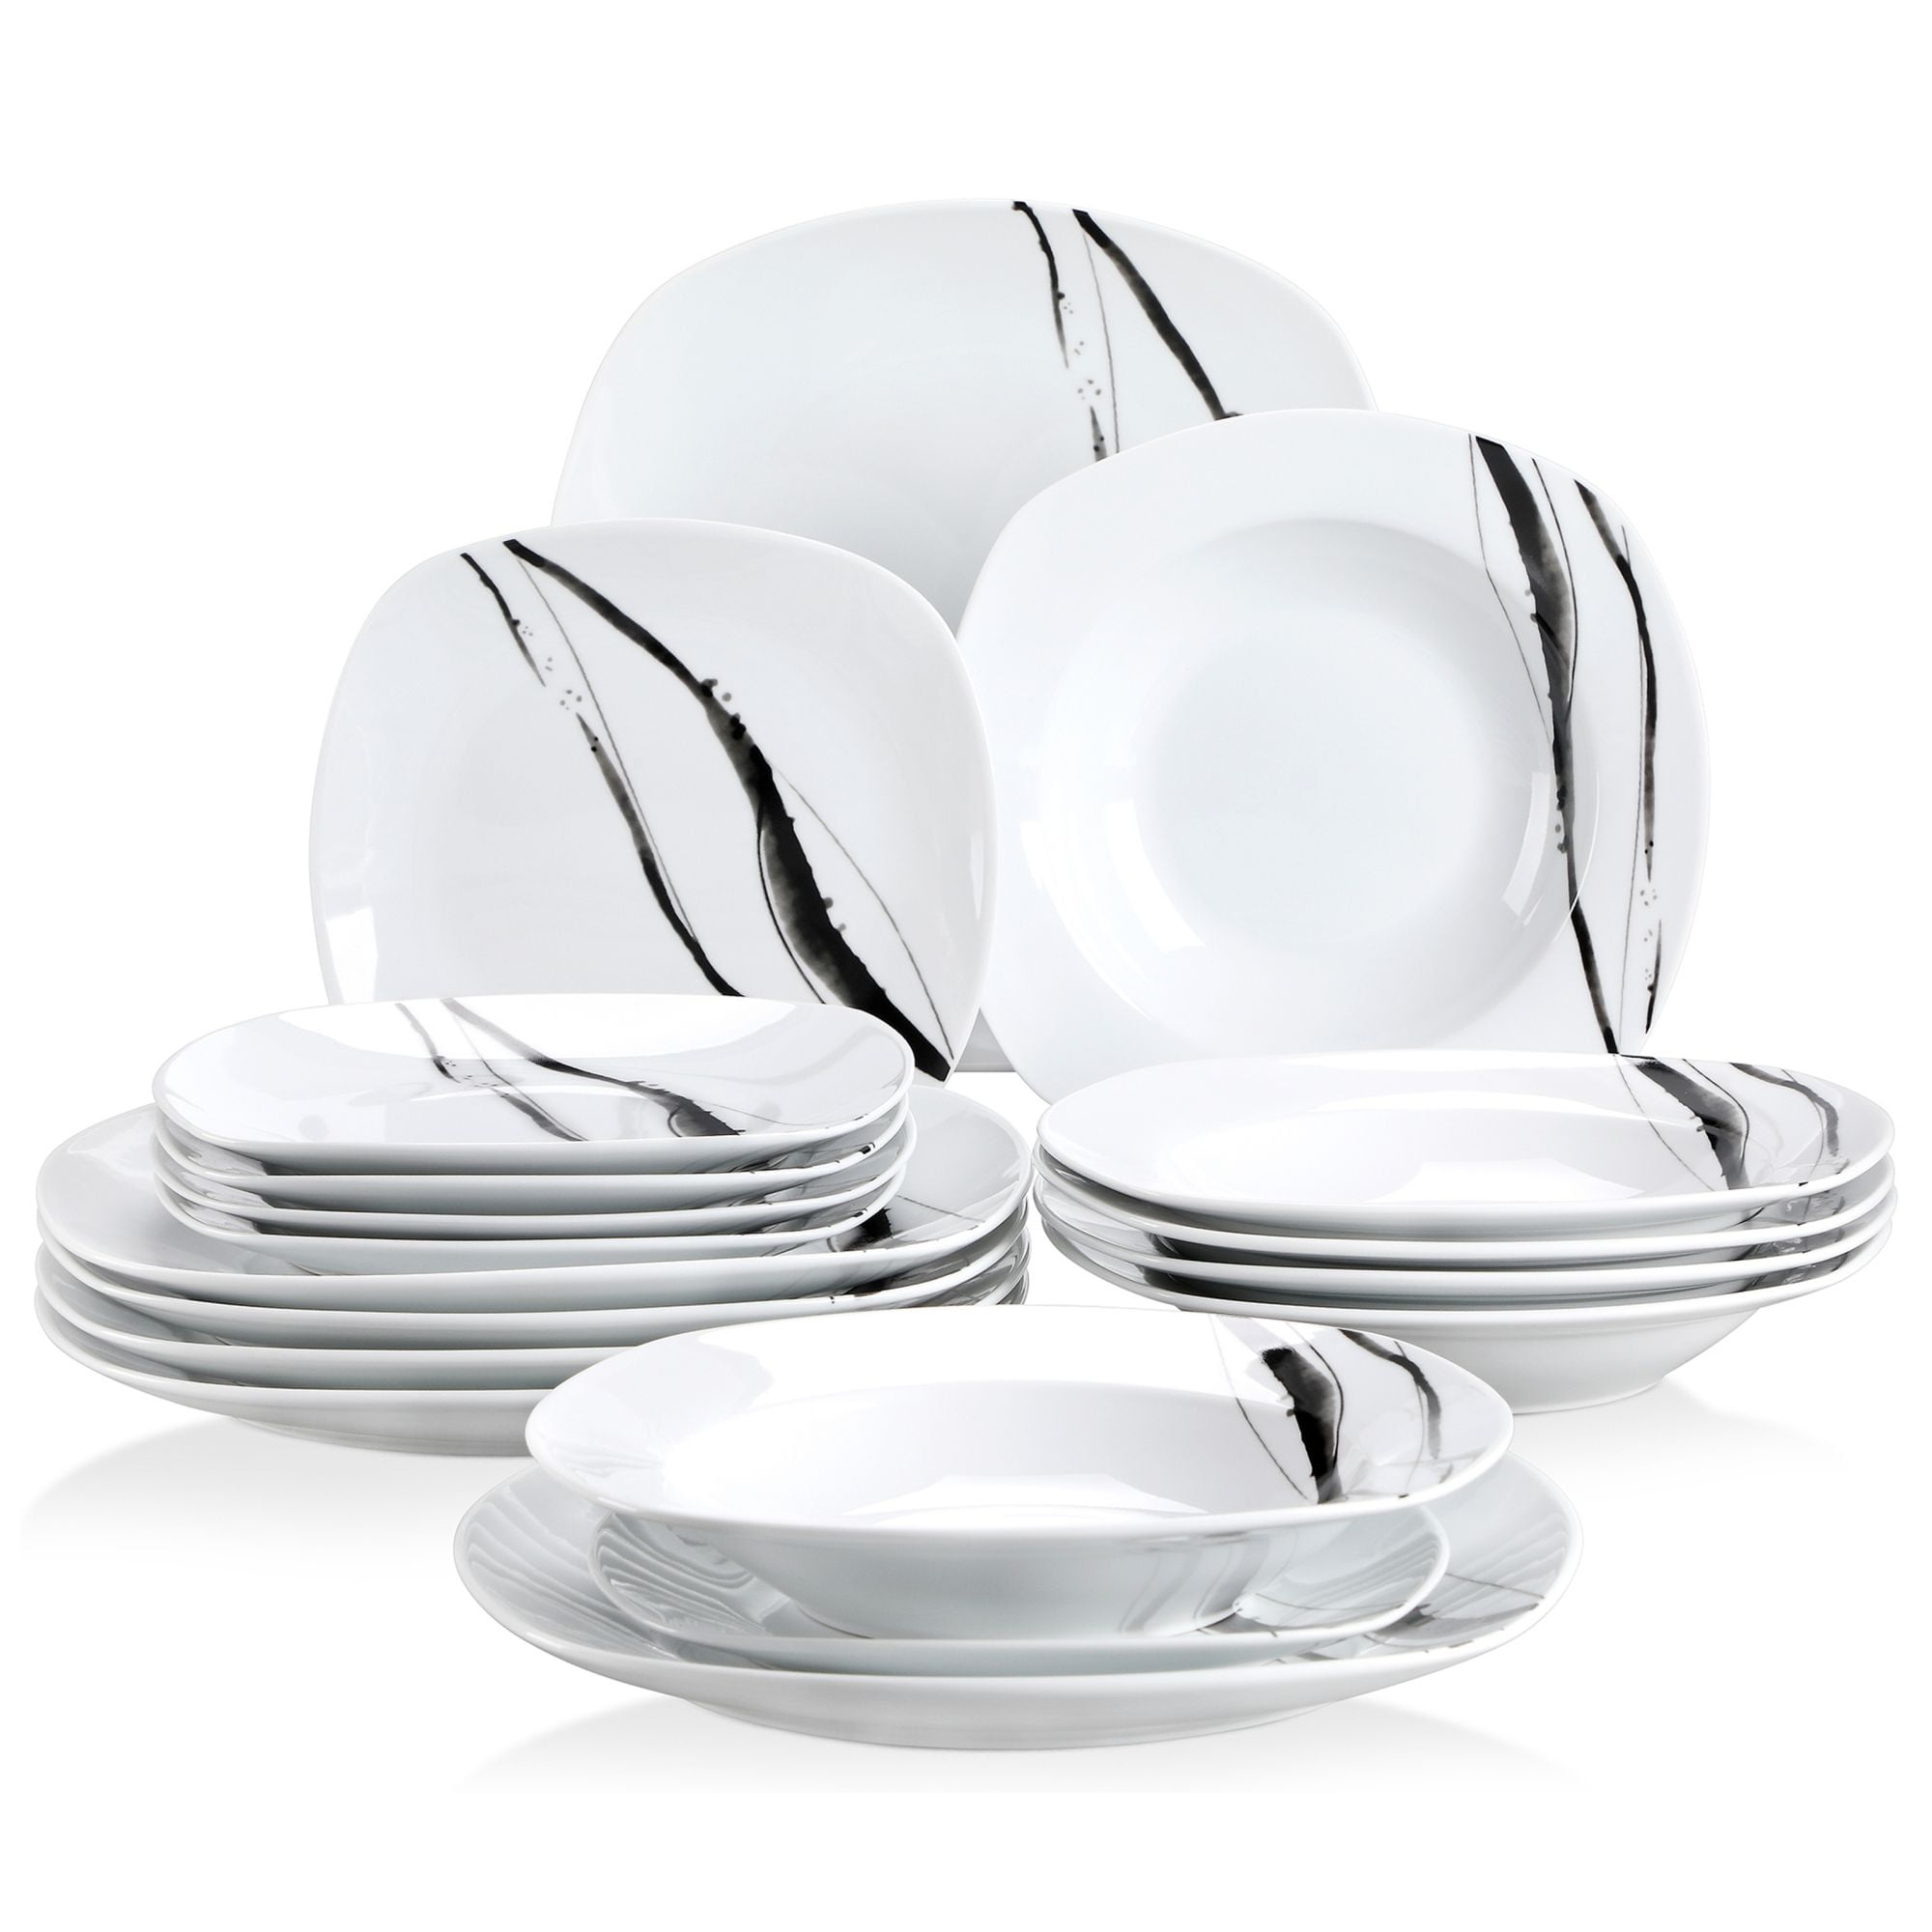 MALACASA SantaClaus Porcelain China Dinnerware Set - Service for